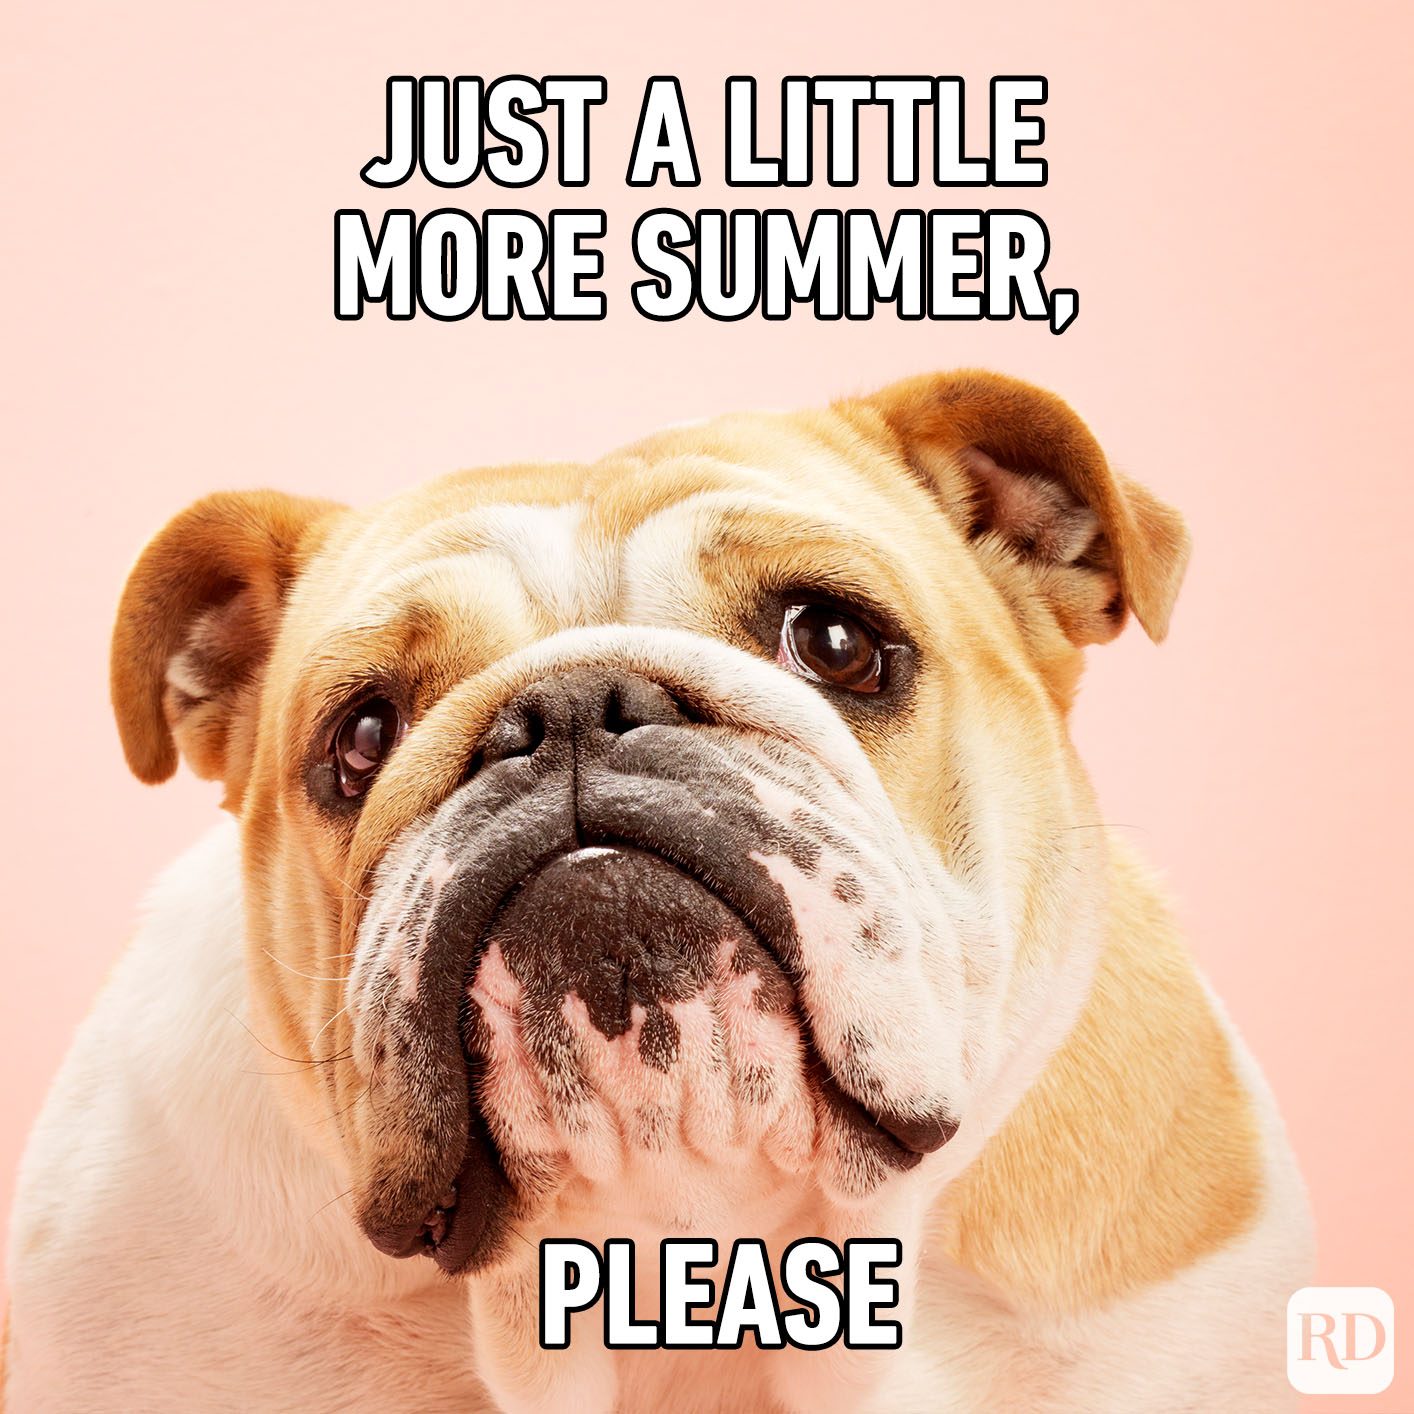 Meme text: Just a little more summer, please